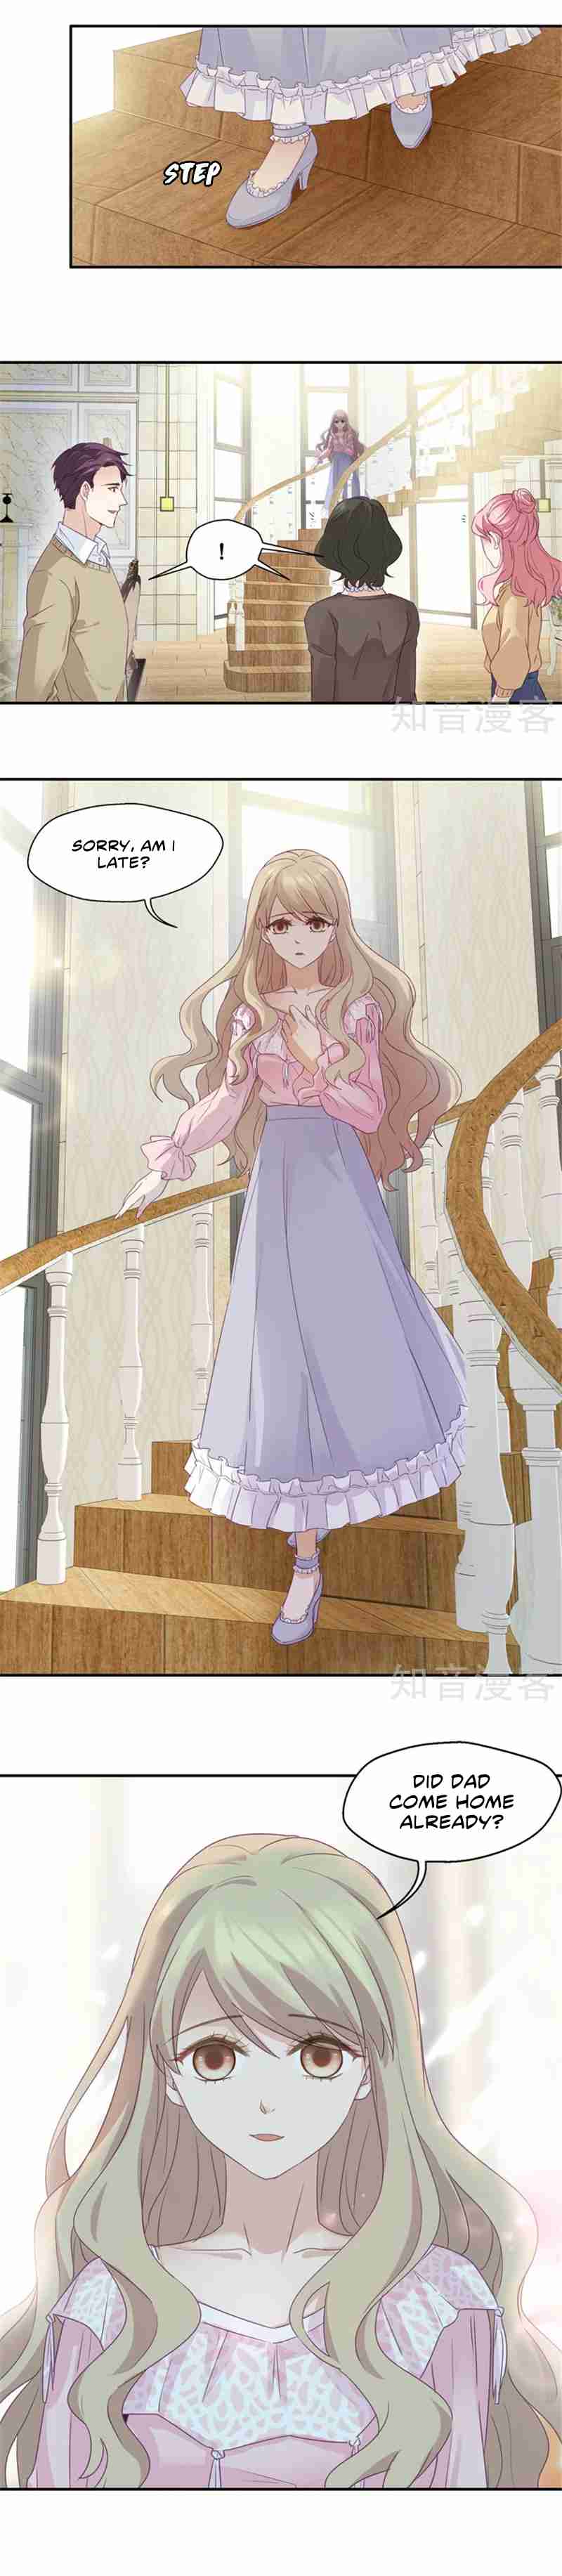 Silkflower Fantasy Dream Ch. 5 Acting As A Cute Innocent Girl?